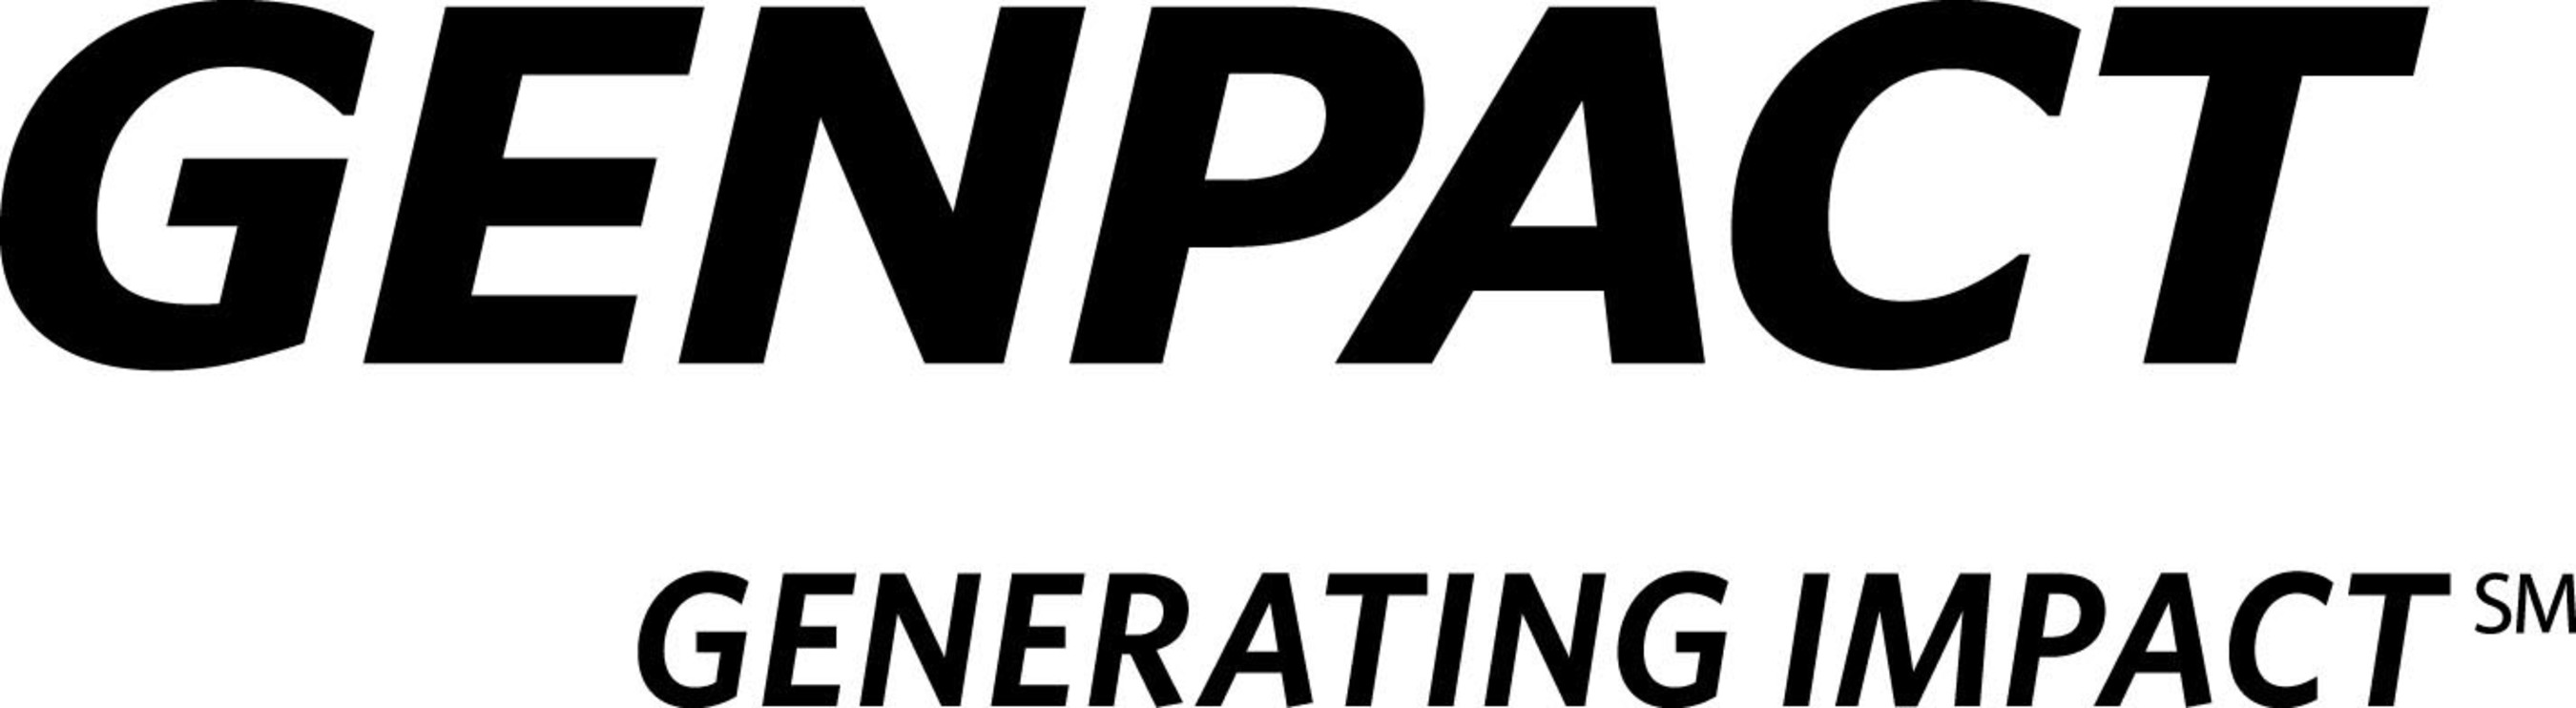 Genpact Limited Logo. (PRNewsFoto/Genpact Limited)